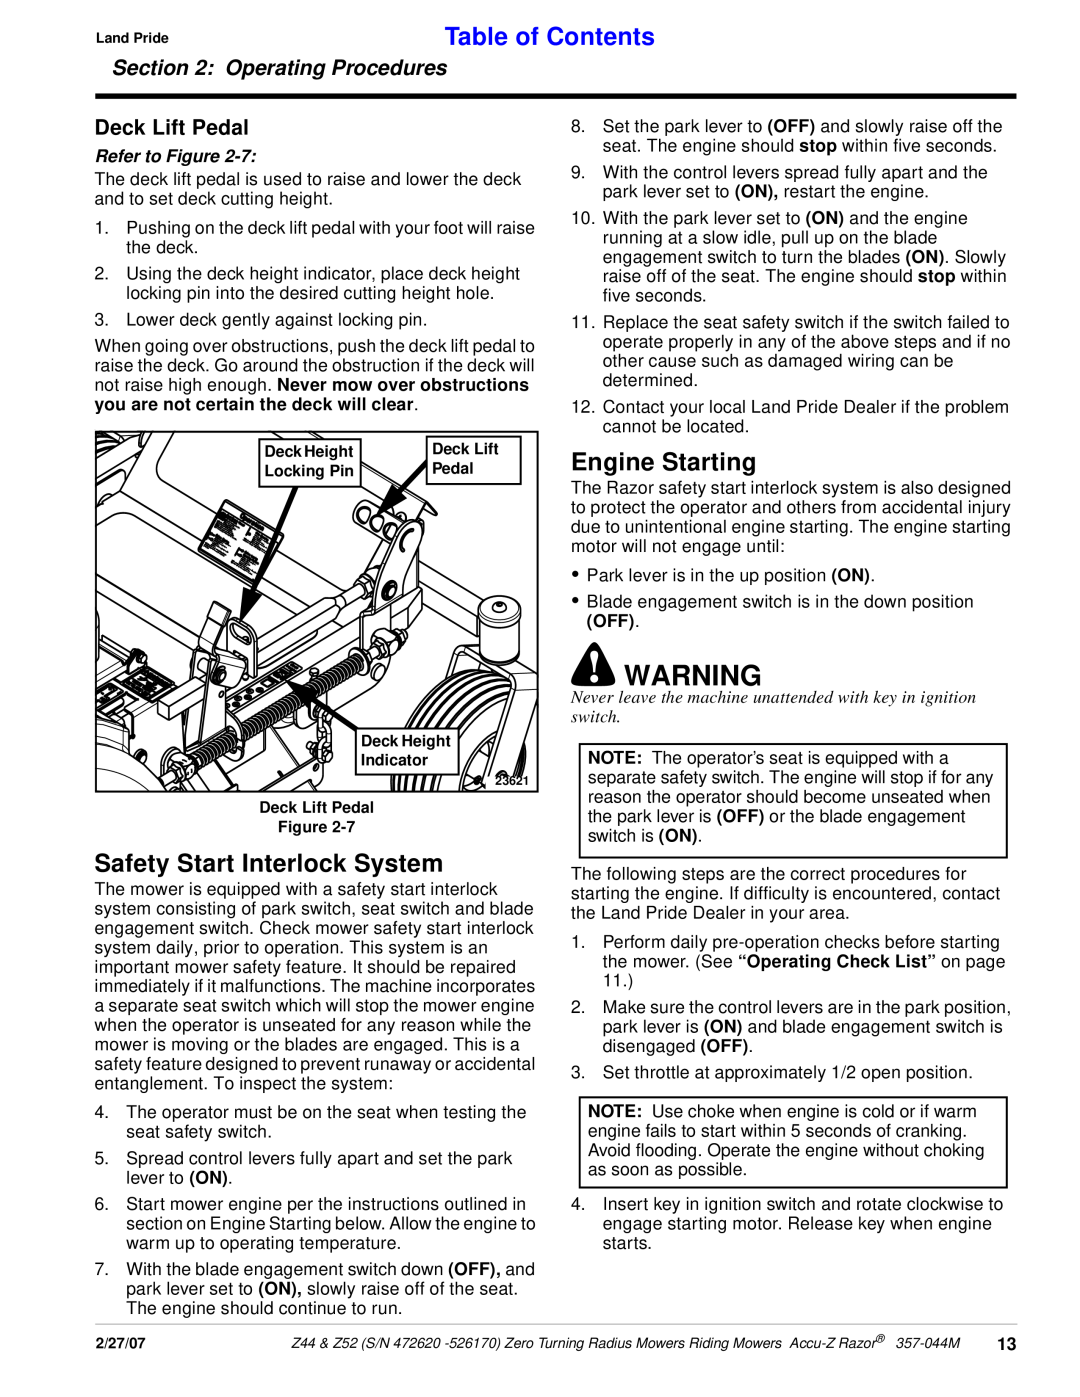 Land Pride 357-044M manual Safety Start Interlock System, Engine Starting, Deck Lift Pedal, Land PrideTable of Contents 